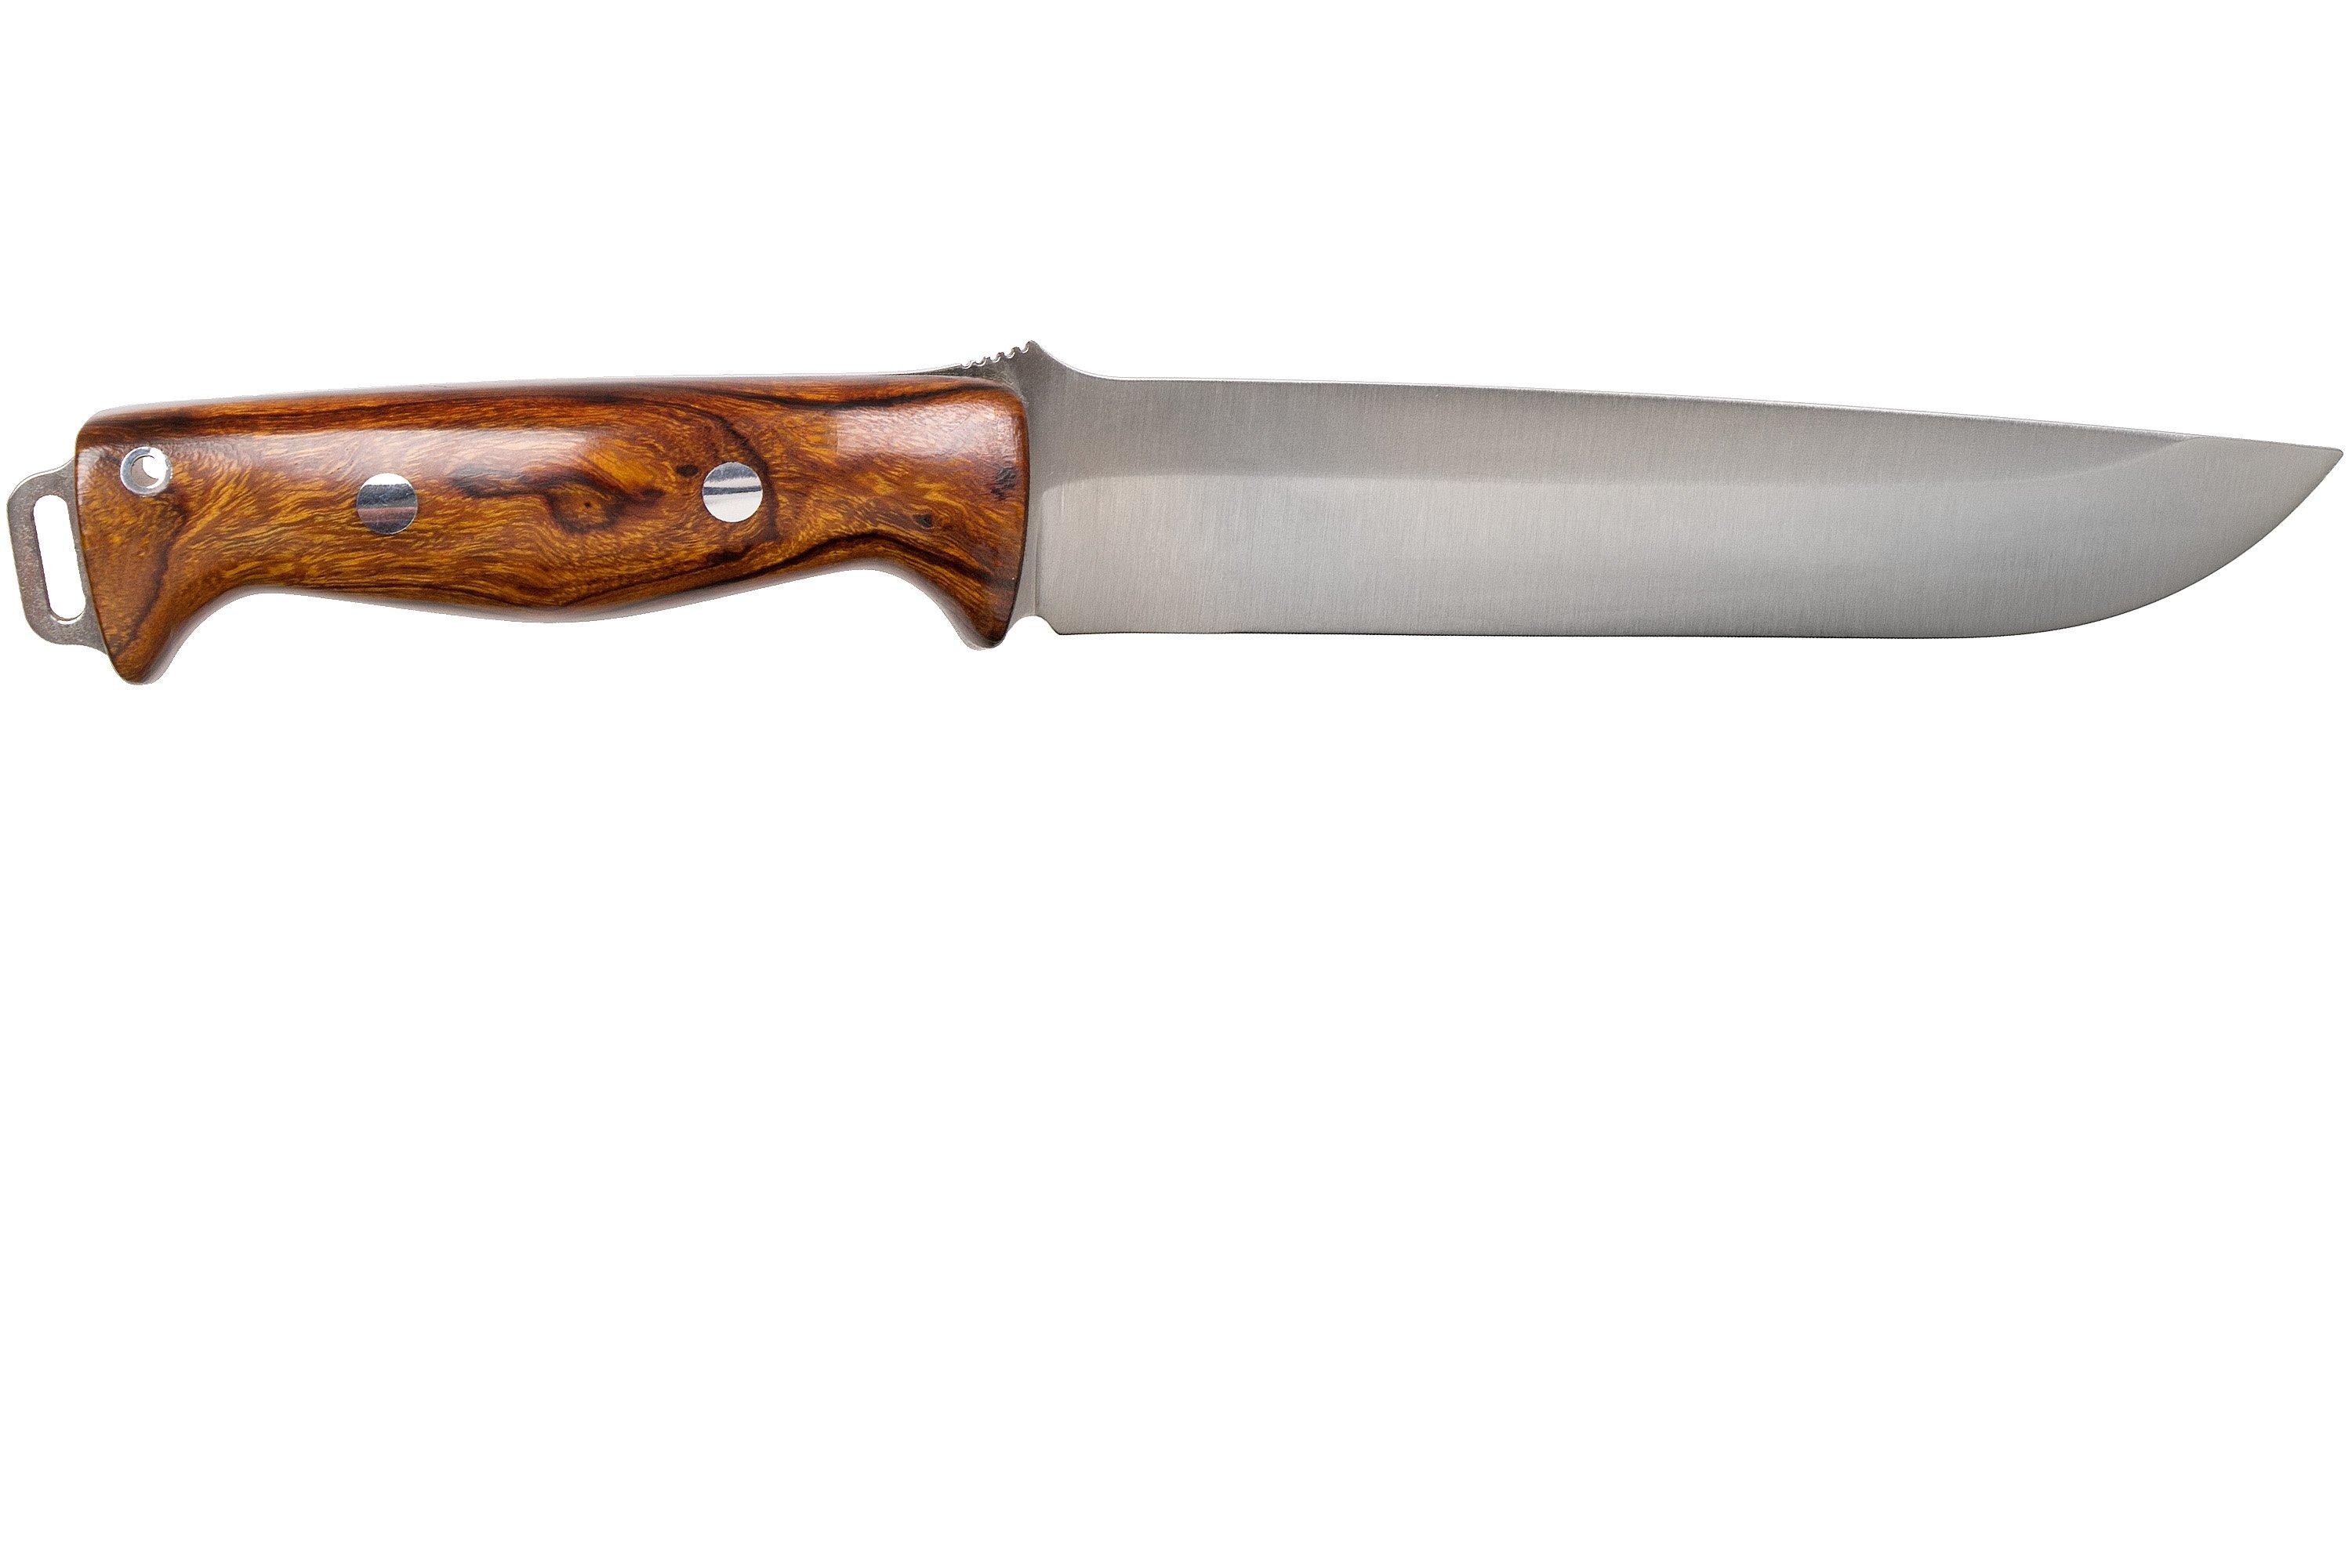 Bark River Bravo 2 A2 Desert Ironwood, outdoor knife